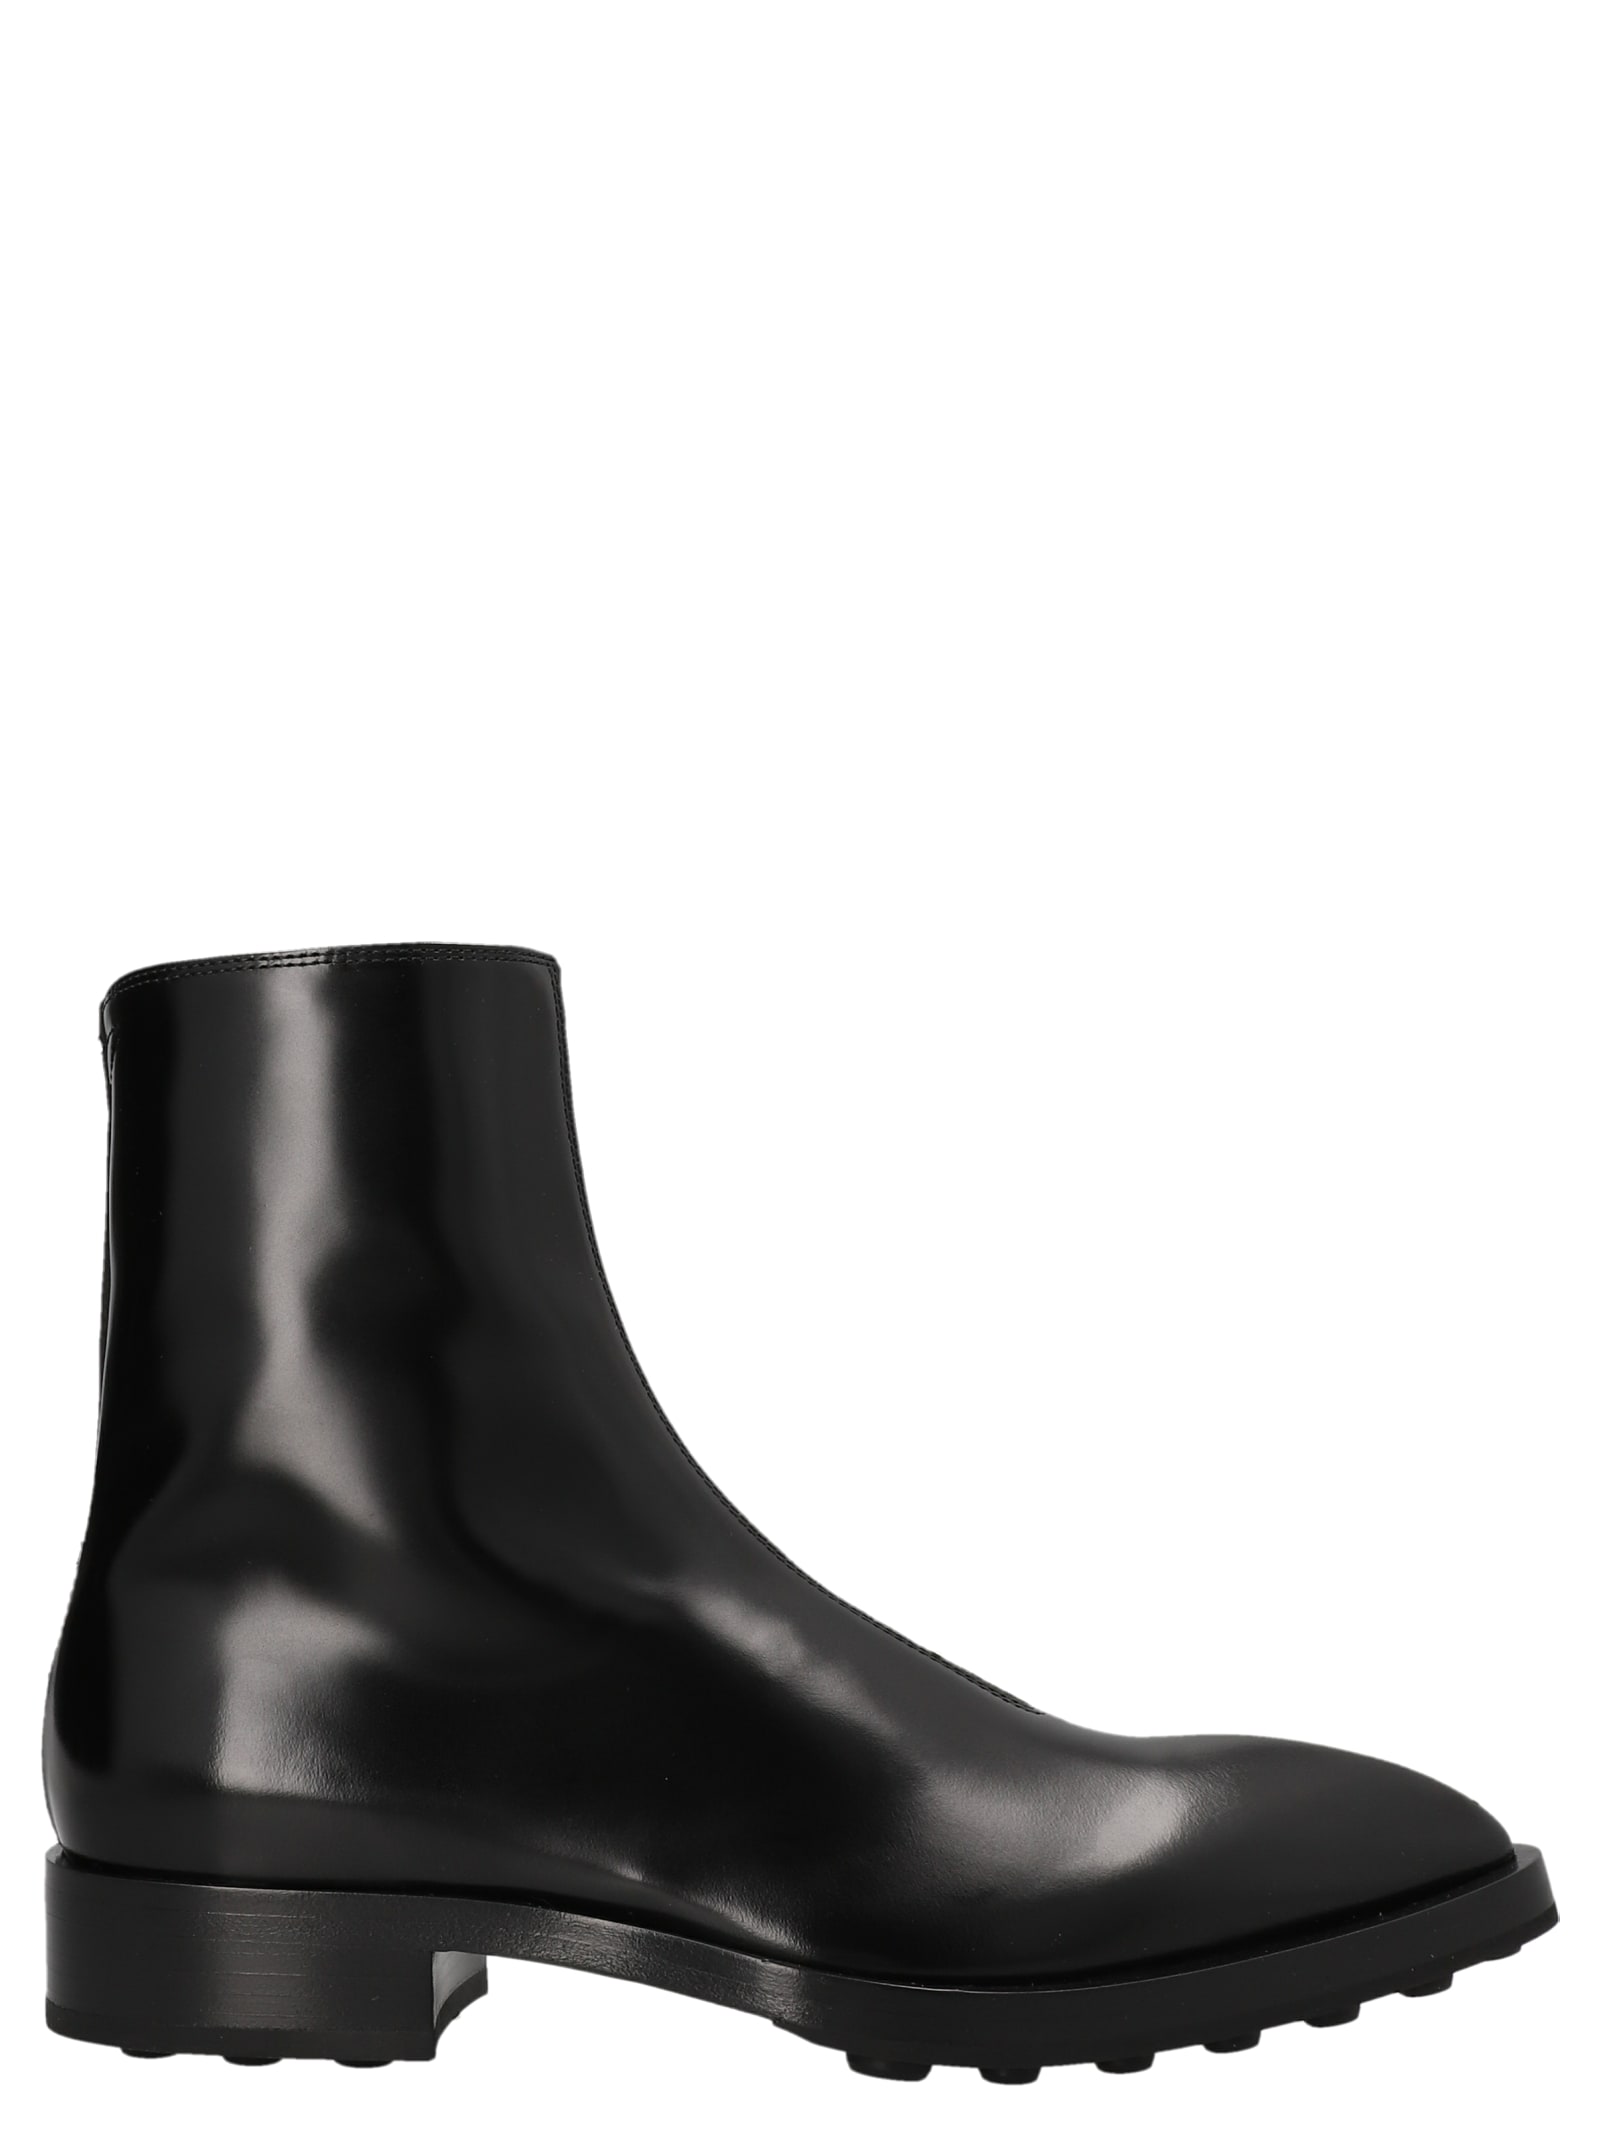 Jil Sander Satin Leather Ankle Boots